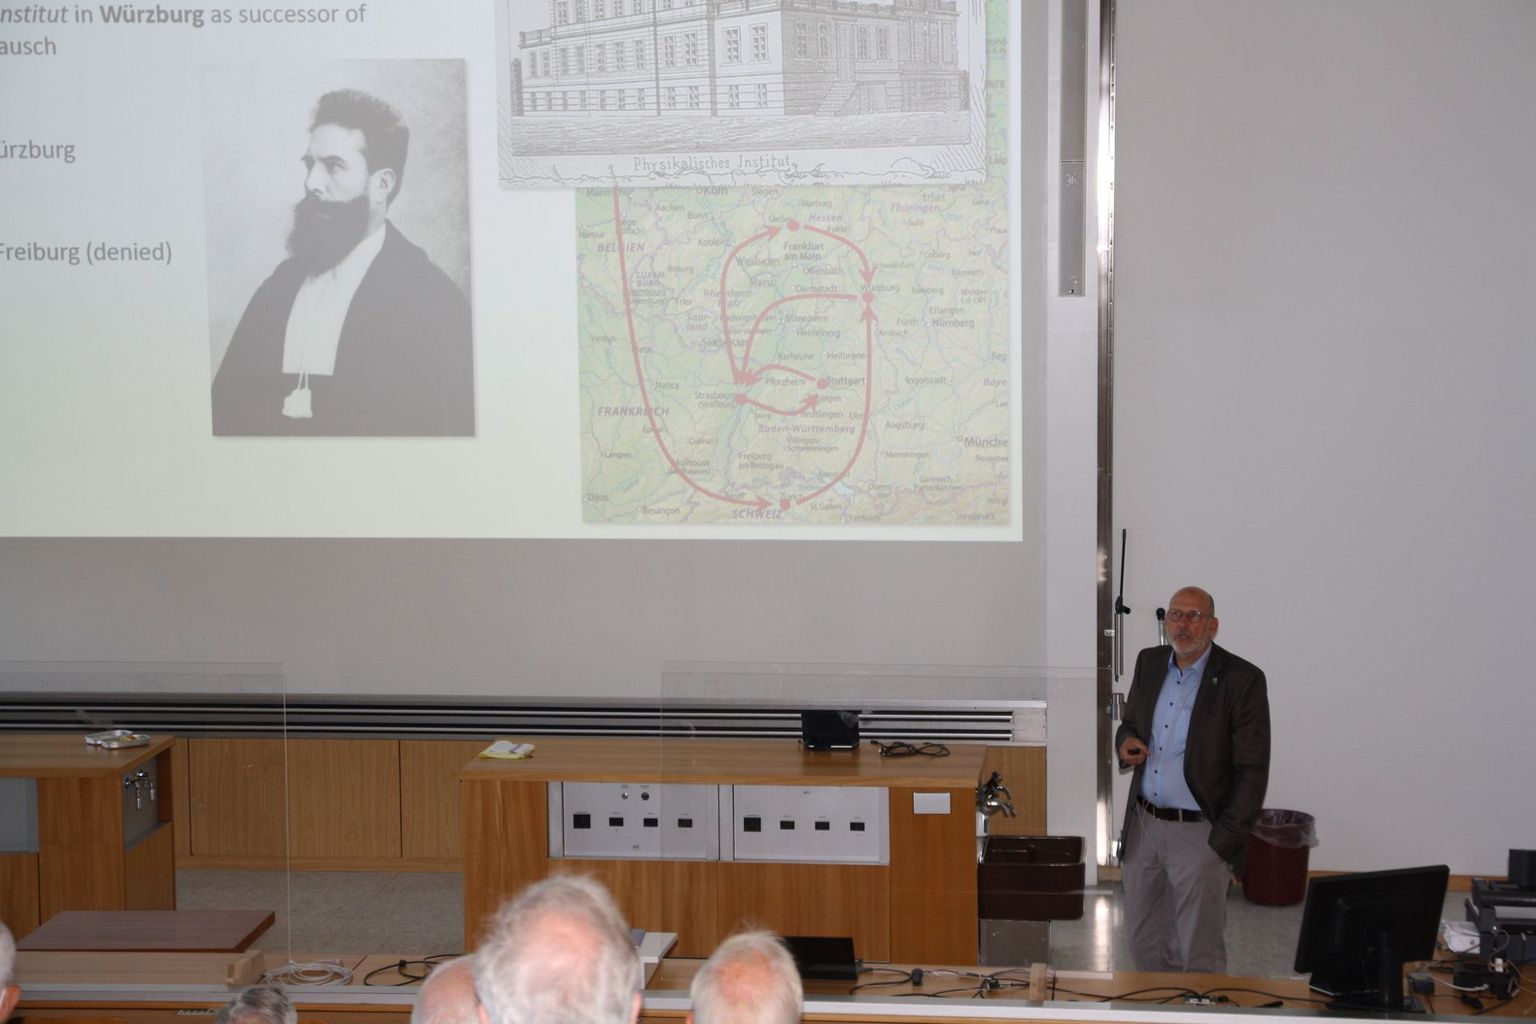 Prof. Dr. Ralph Claessen from the University of Würzburg describes Röntgen's career